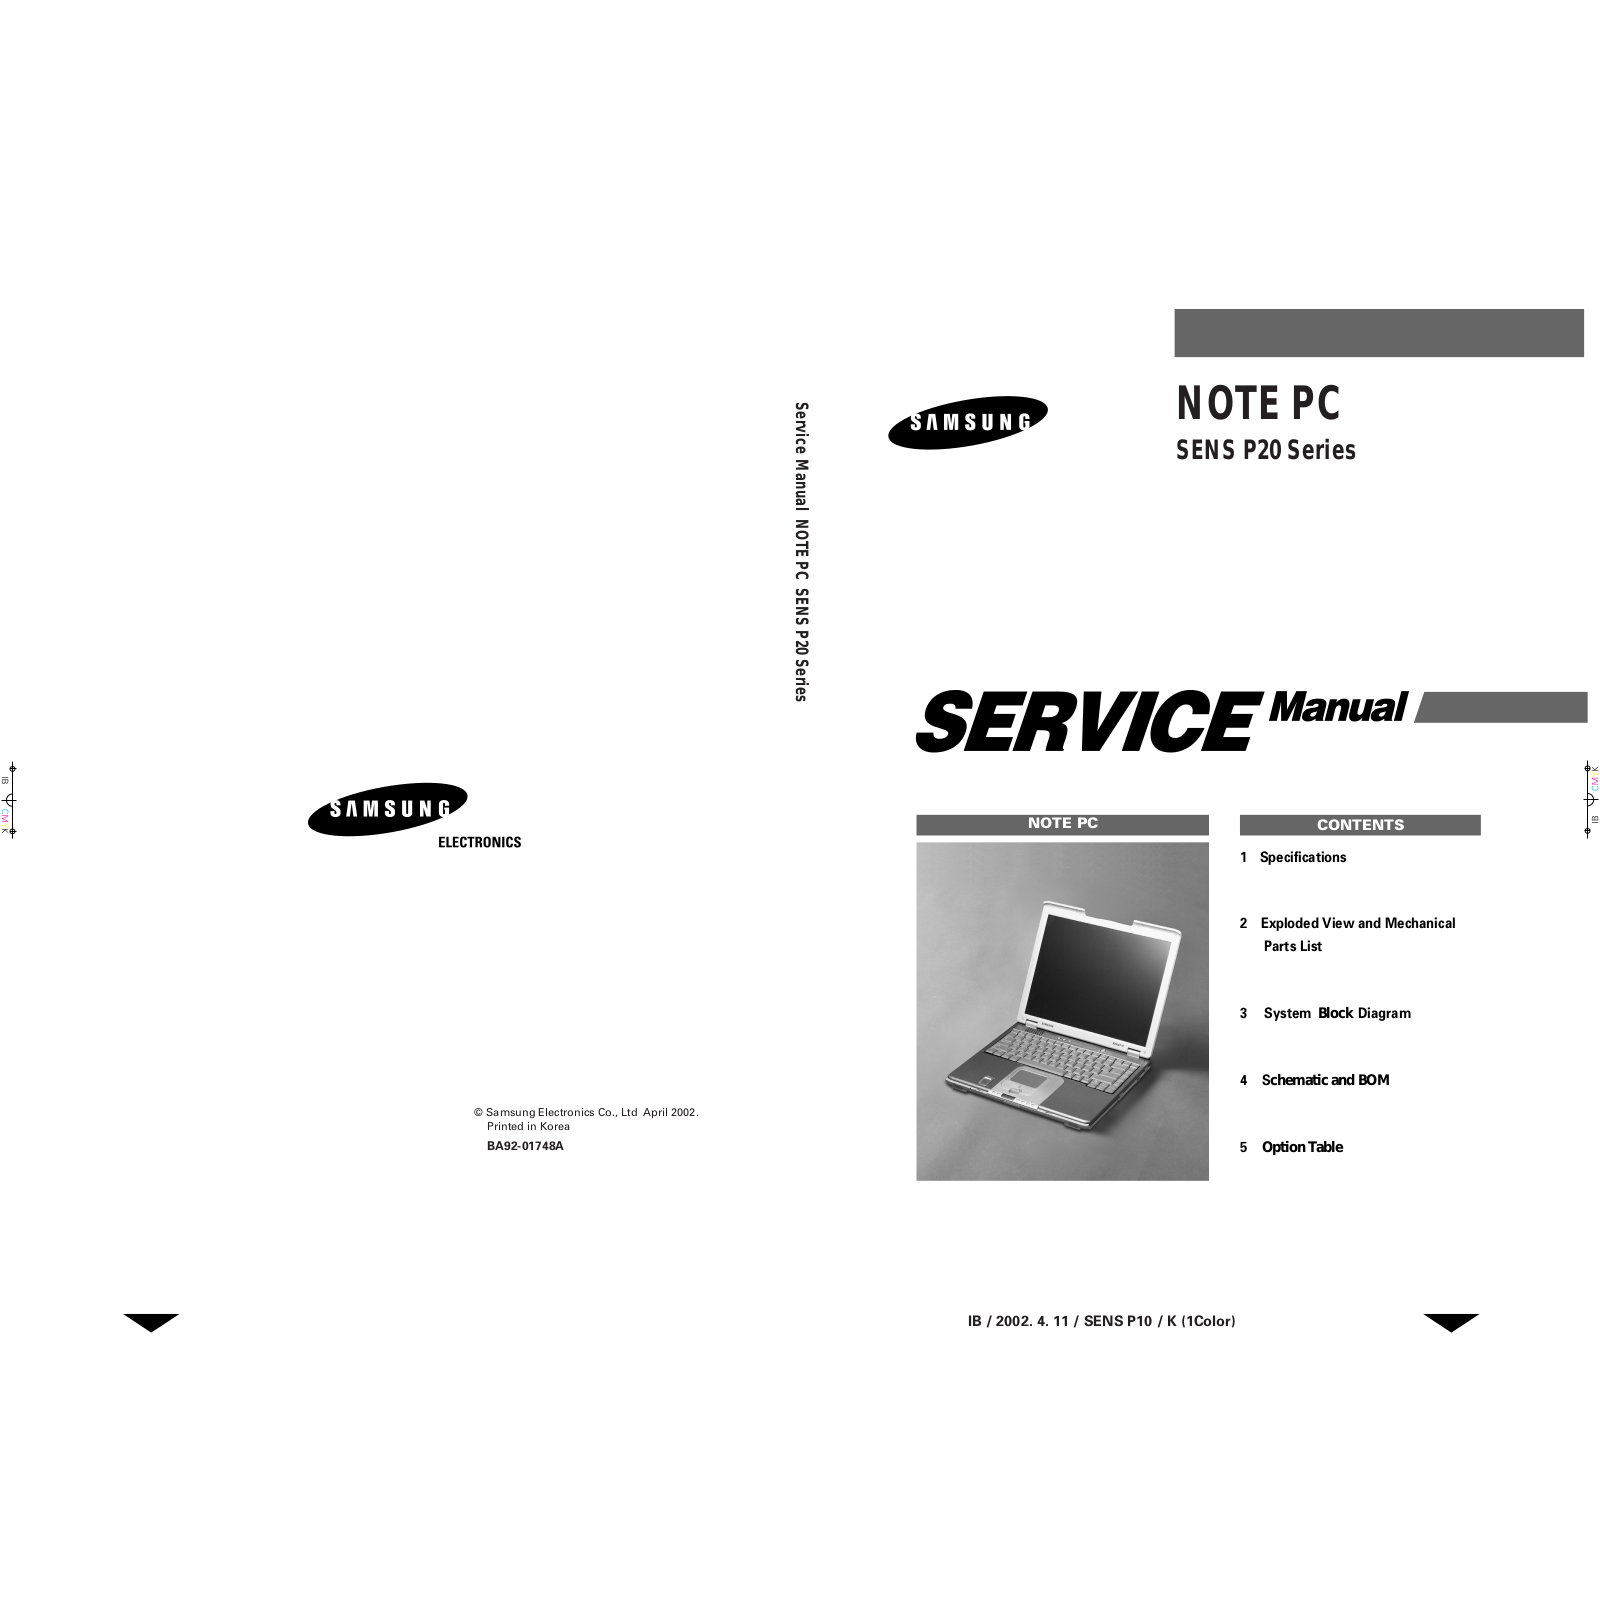 Samsung SENS P20 Service Manual